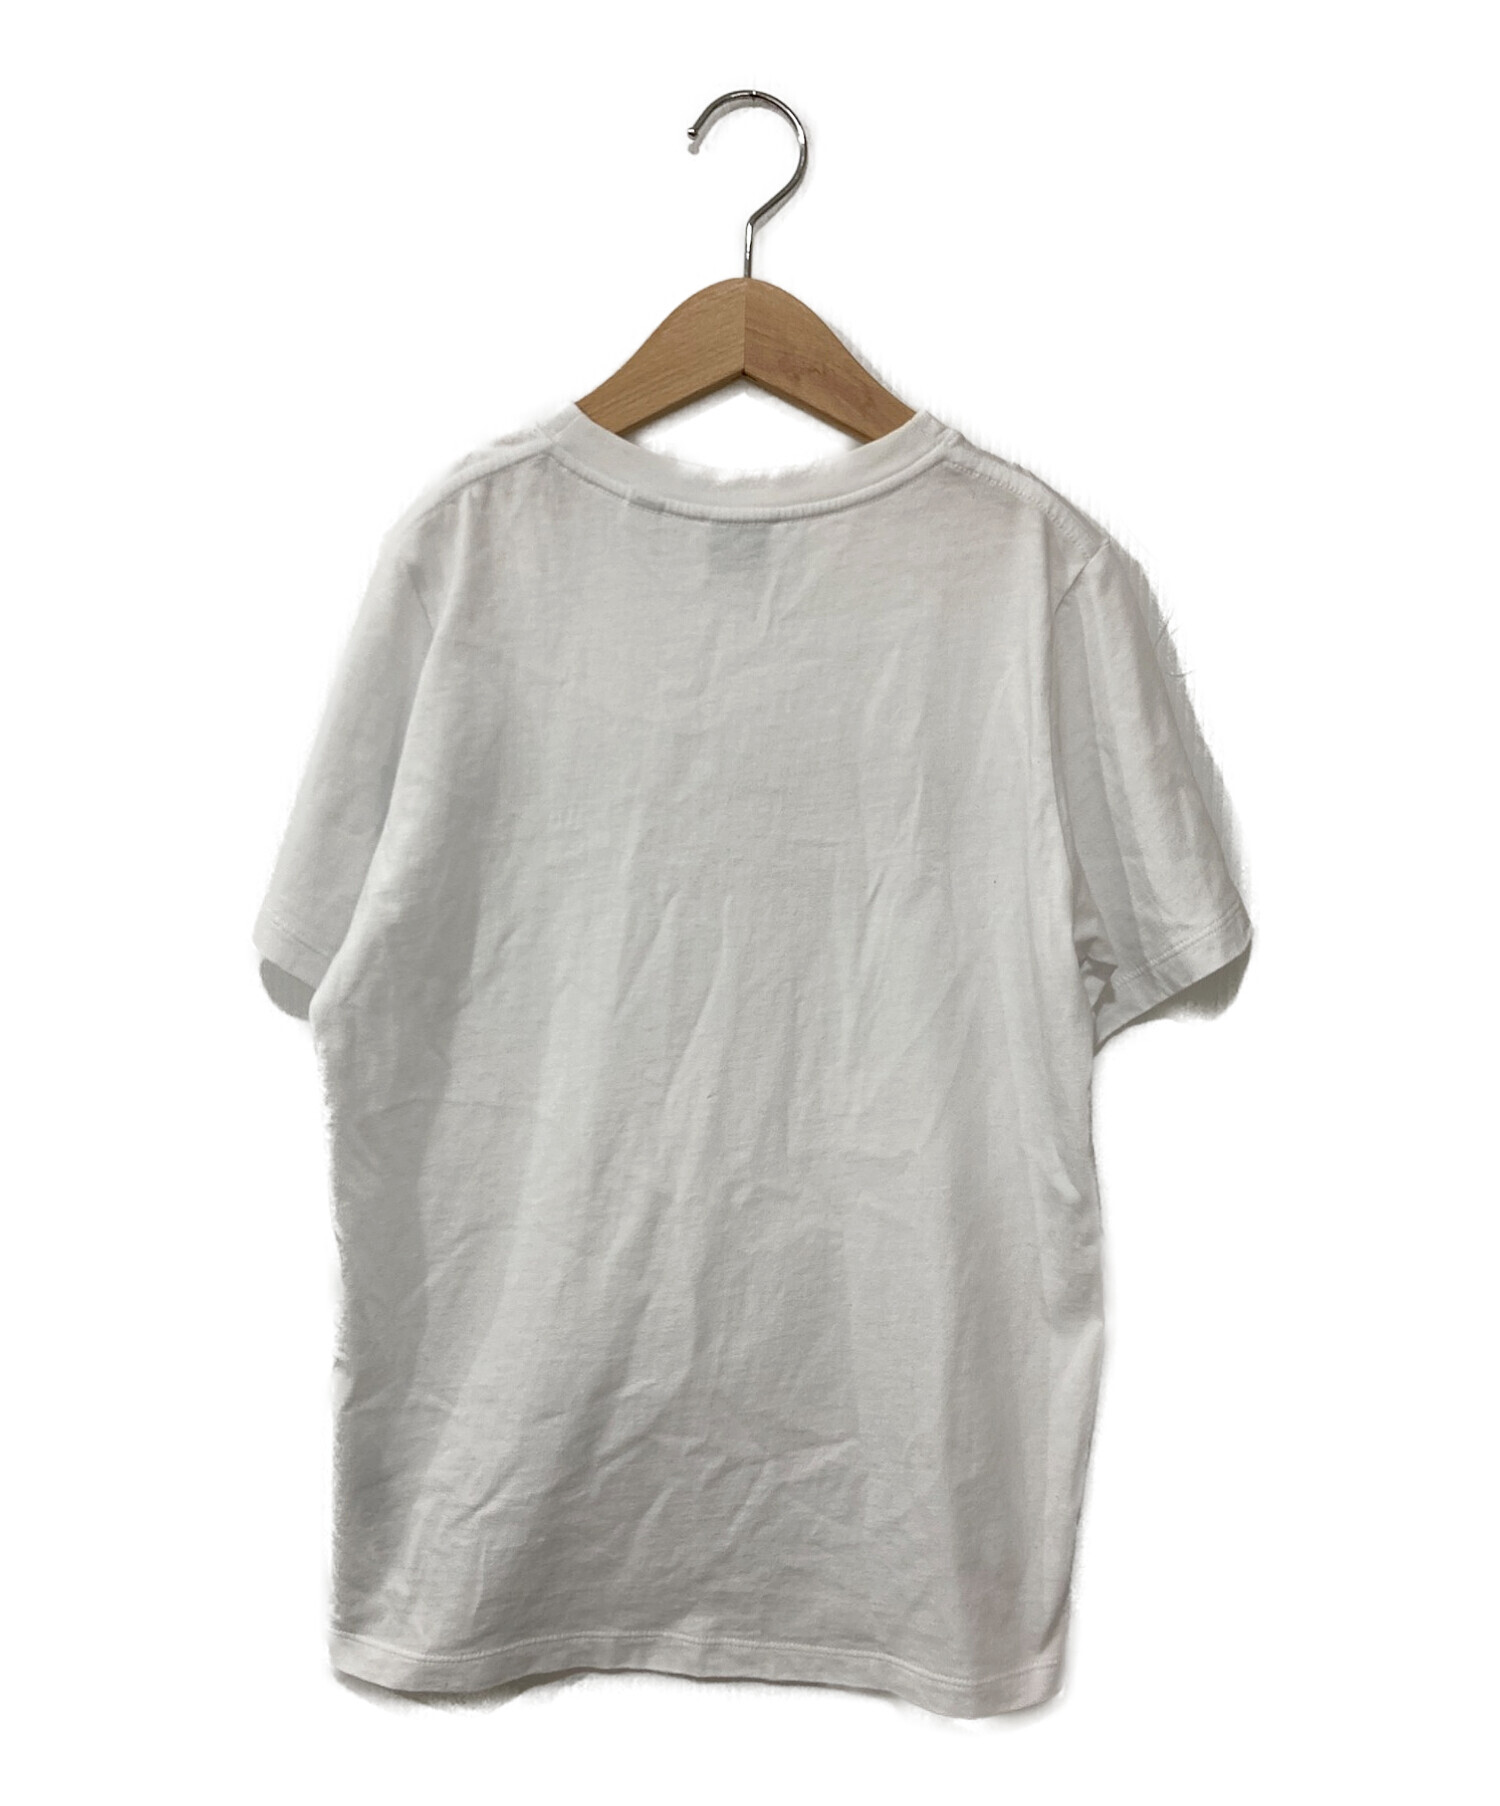 BURBERRY (バーバリー) Tシャツ サイズ:10Y